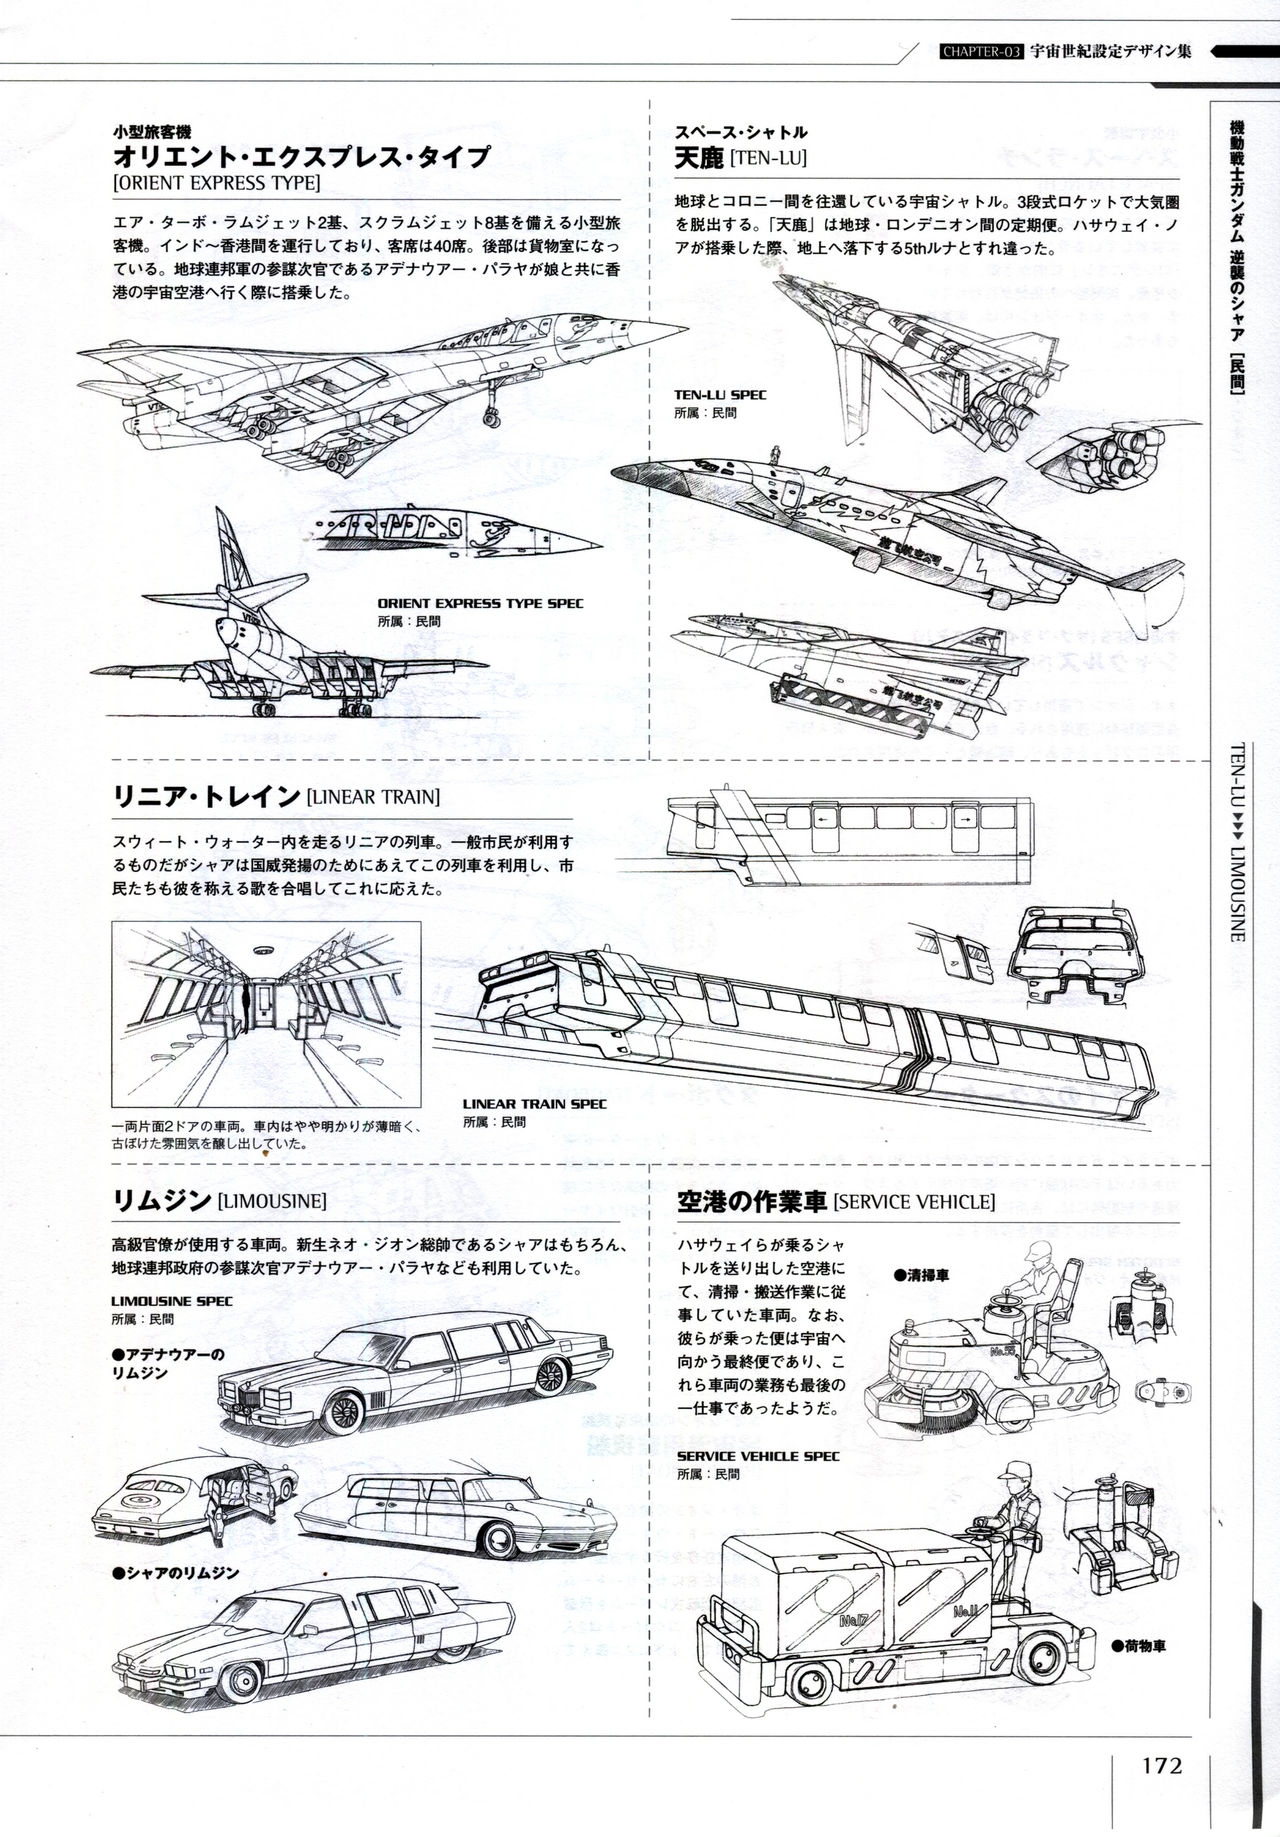 Mobile Suit Gundam - Ship & Aerospace Plane Encyclopedia - Revised Edition 177